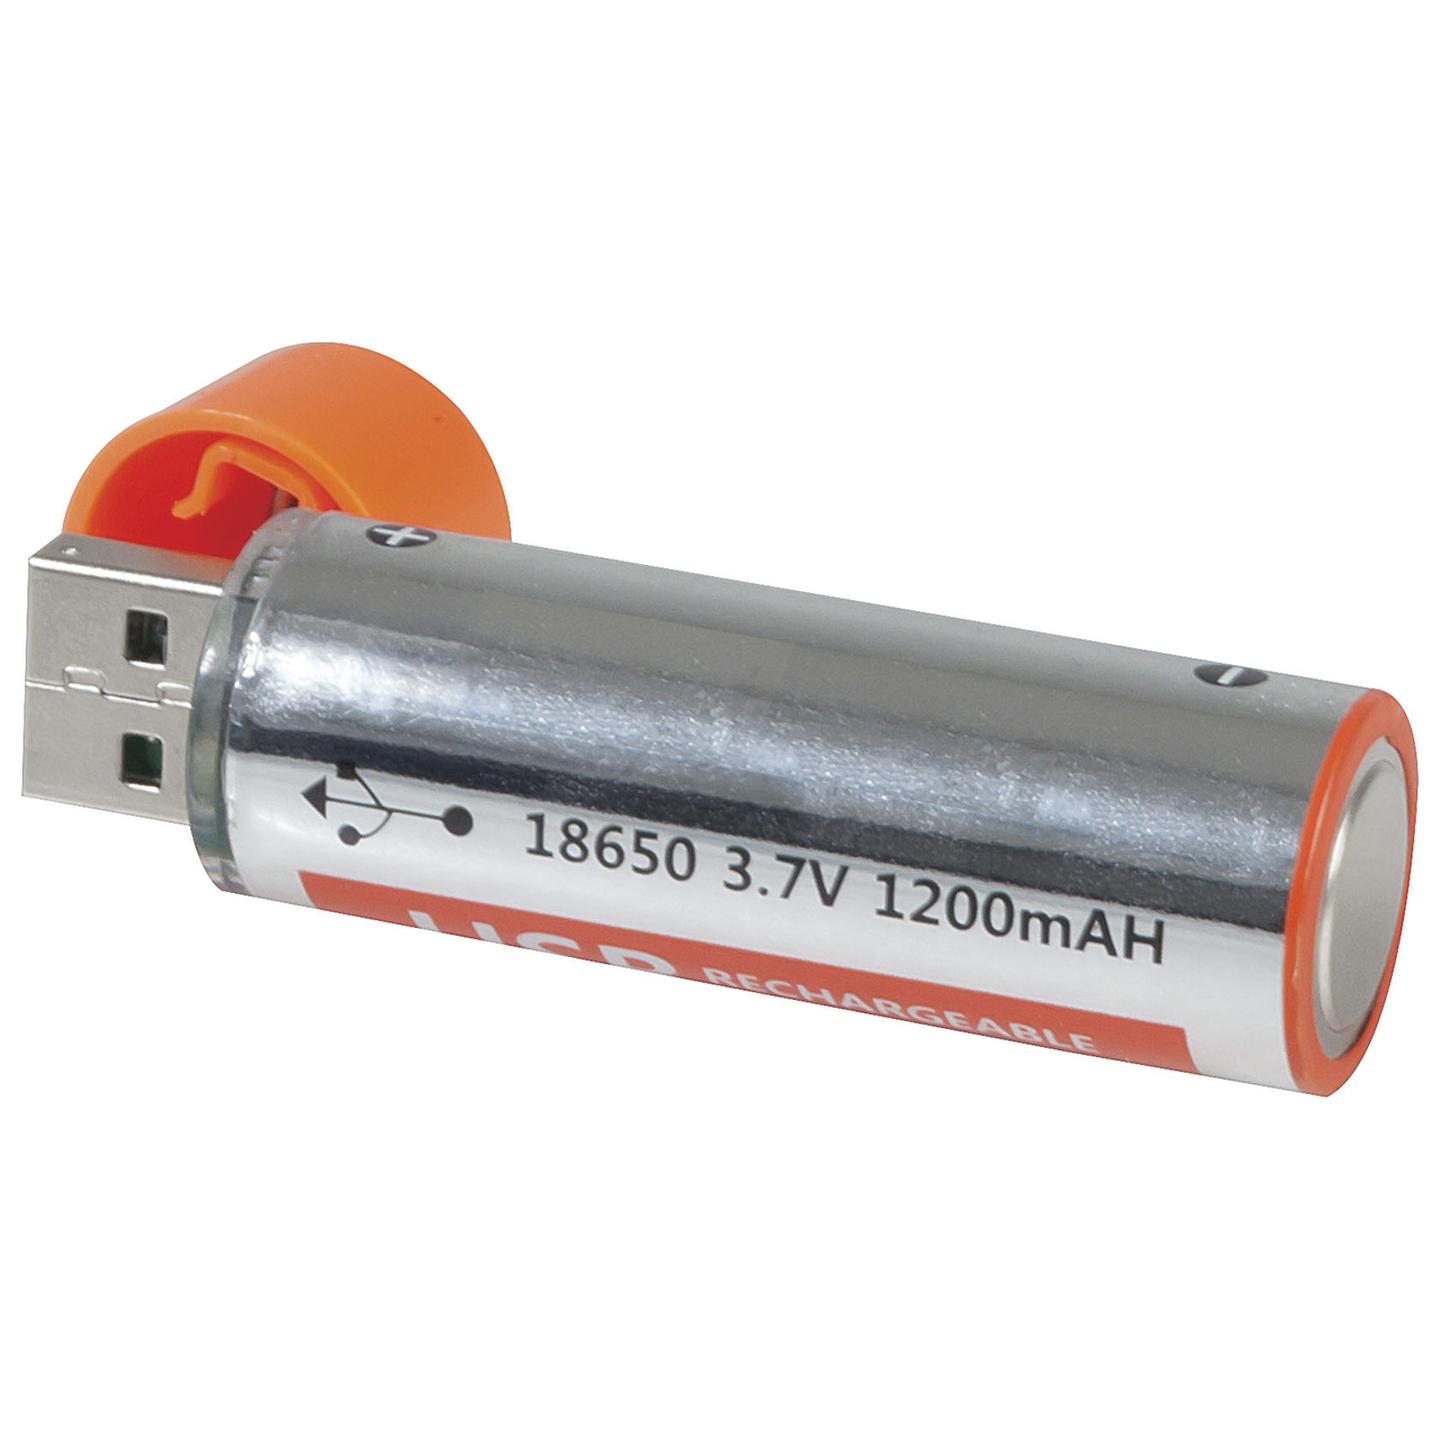 USB Rechargeable 18650 3.7V 1200mAH Li-Po Battery